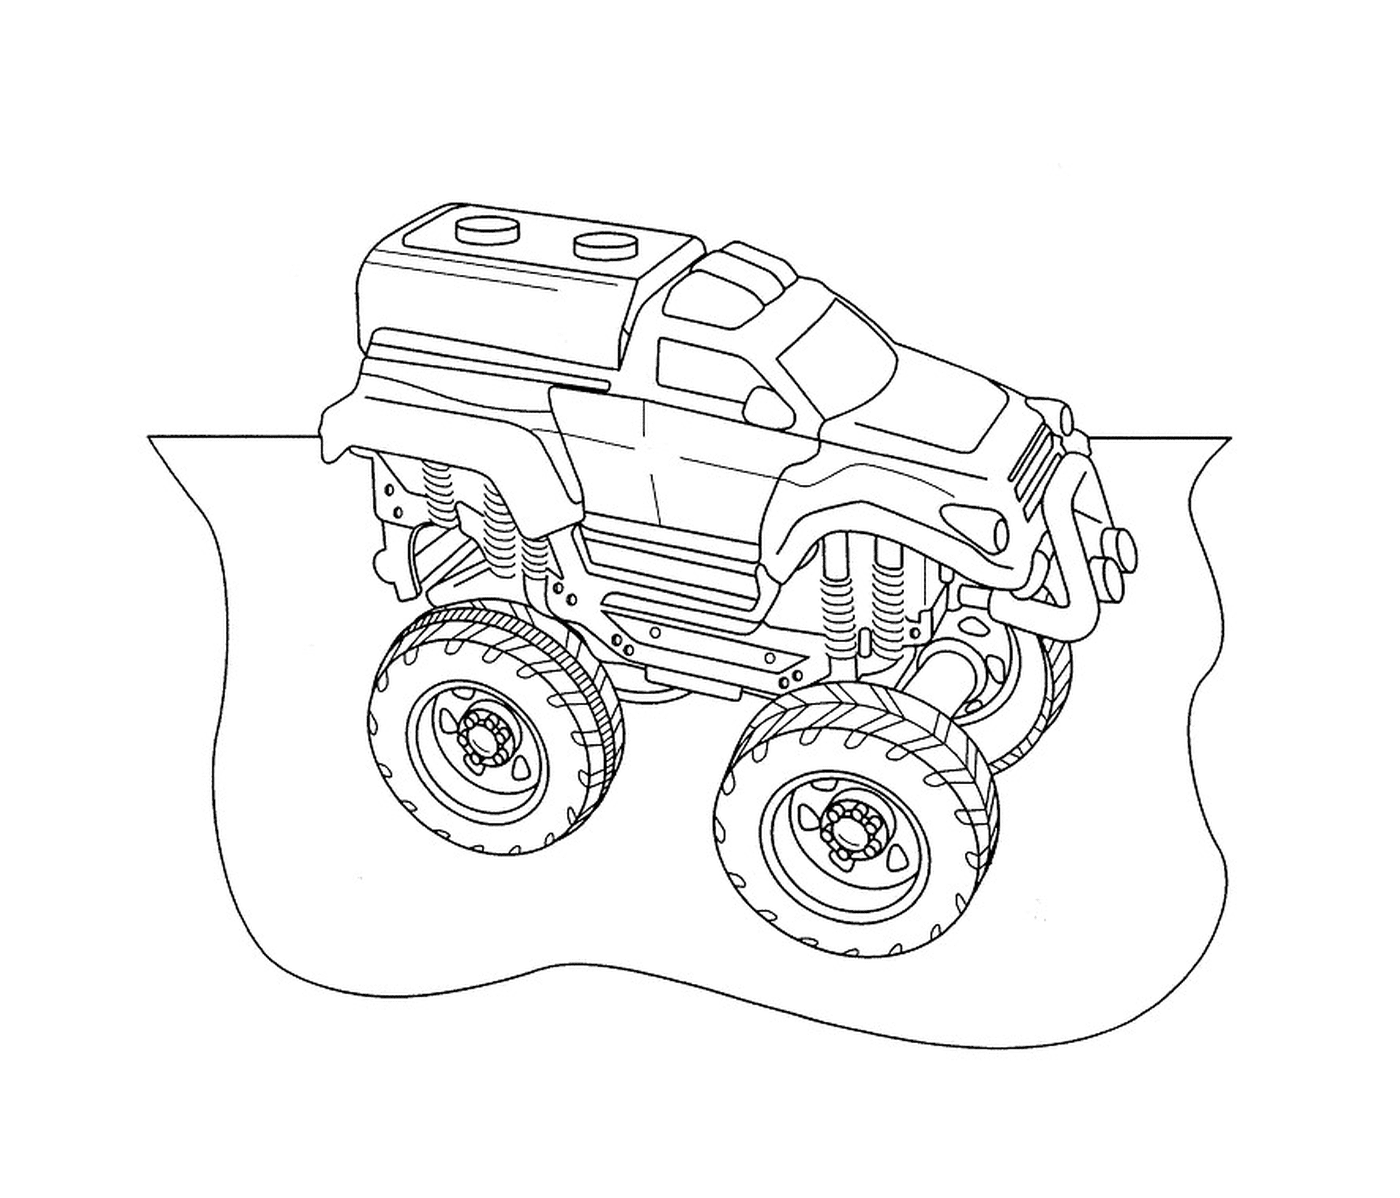  Rally cars, monster truck 